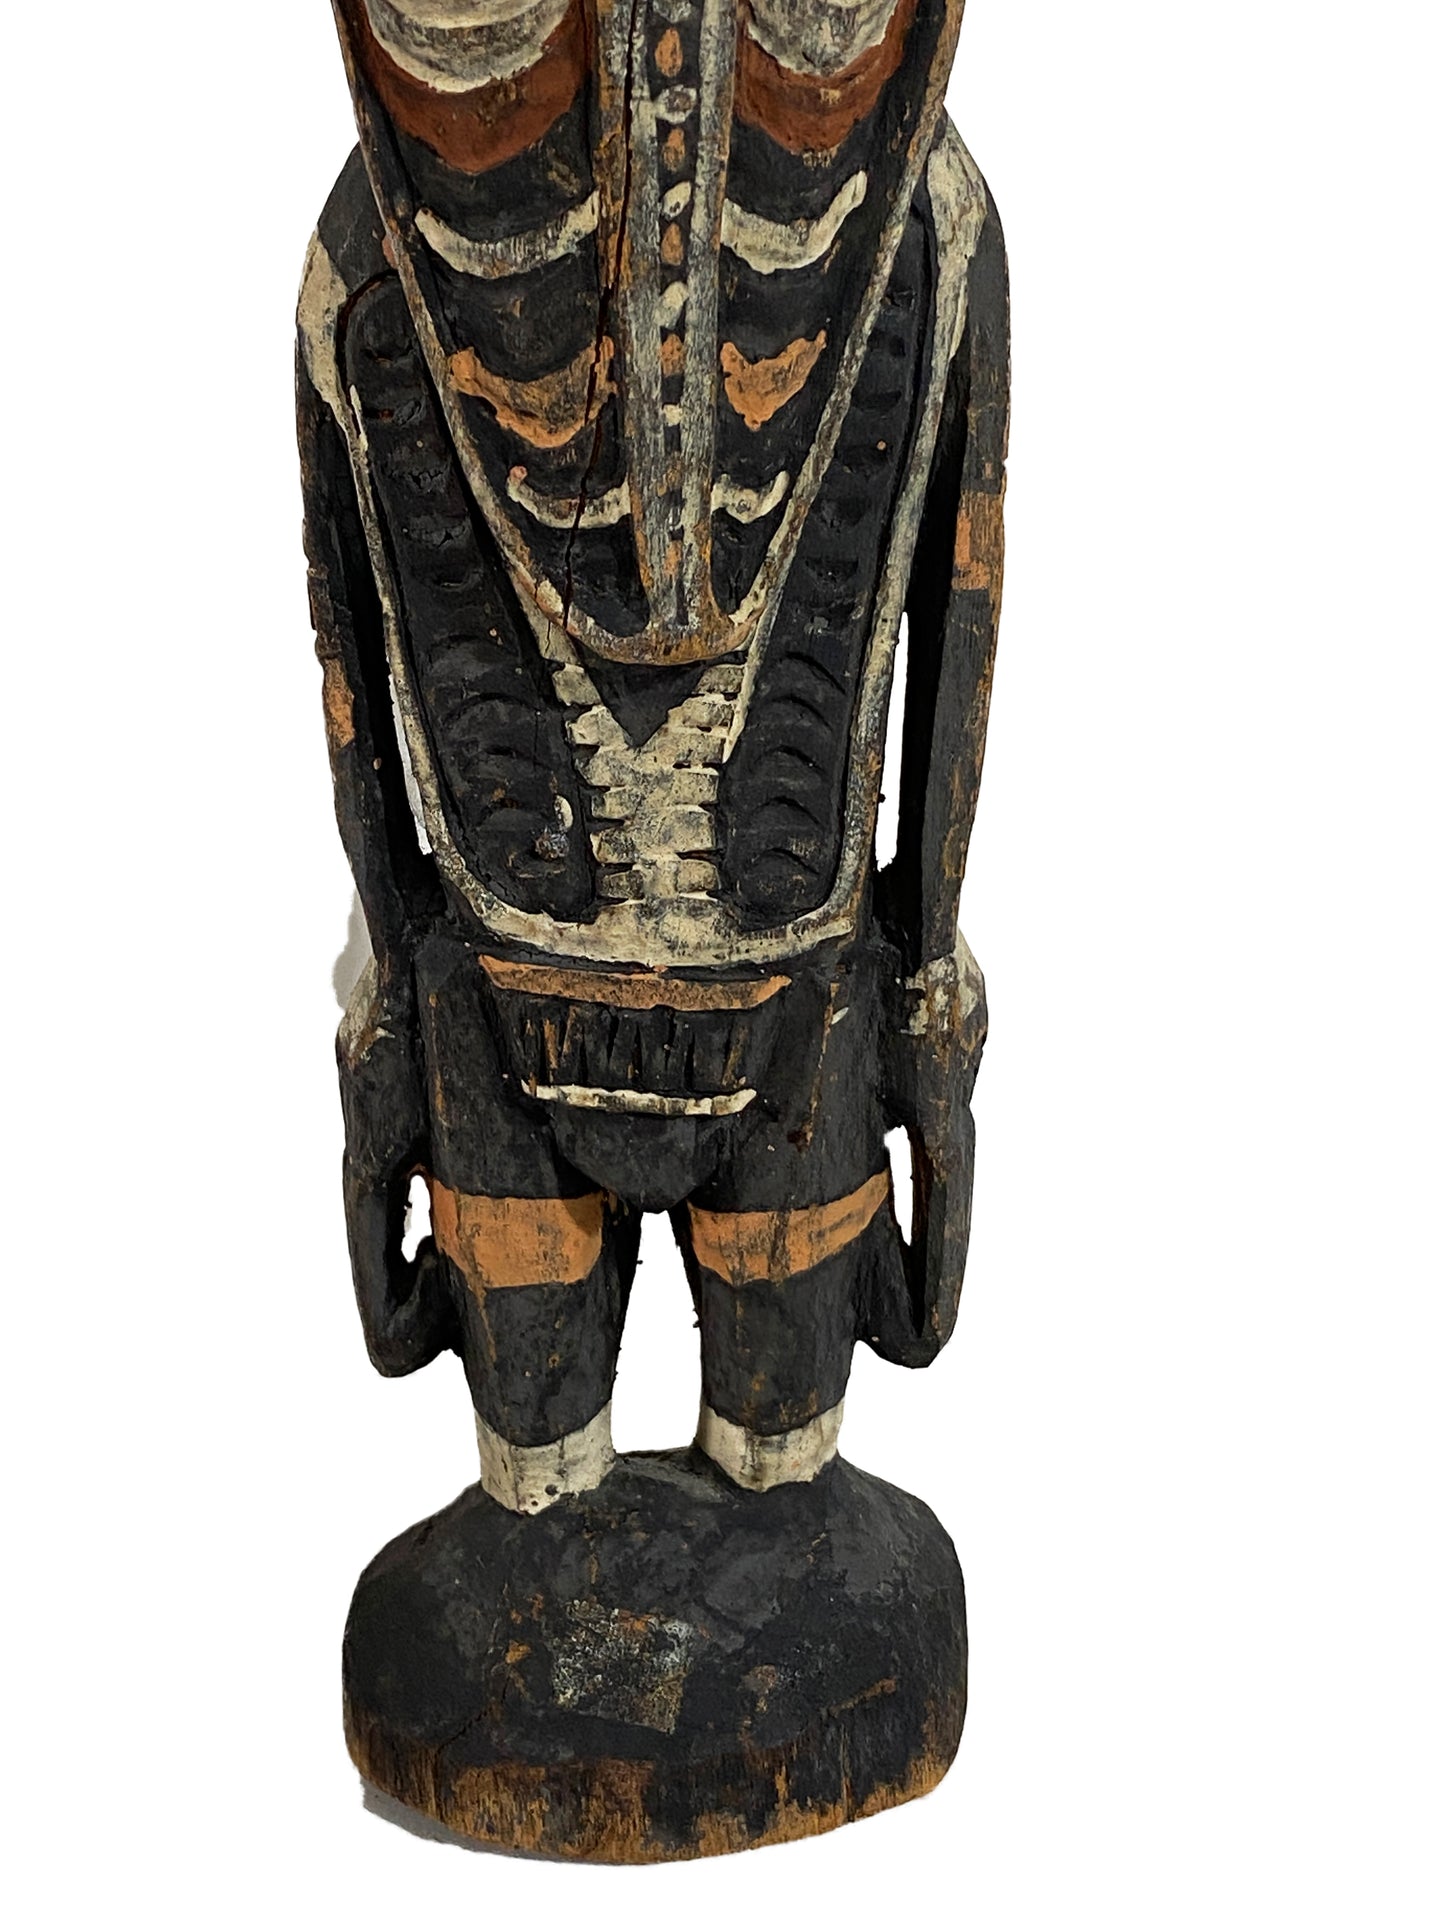 #4040 Old/Rare Tribal Oceanic Papua-New Guinea Standing Ancestor Figure Sculpture